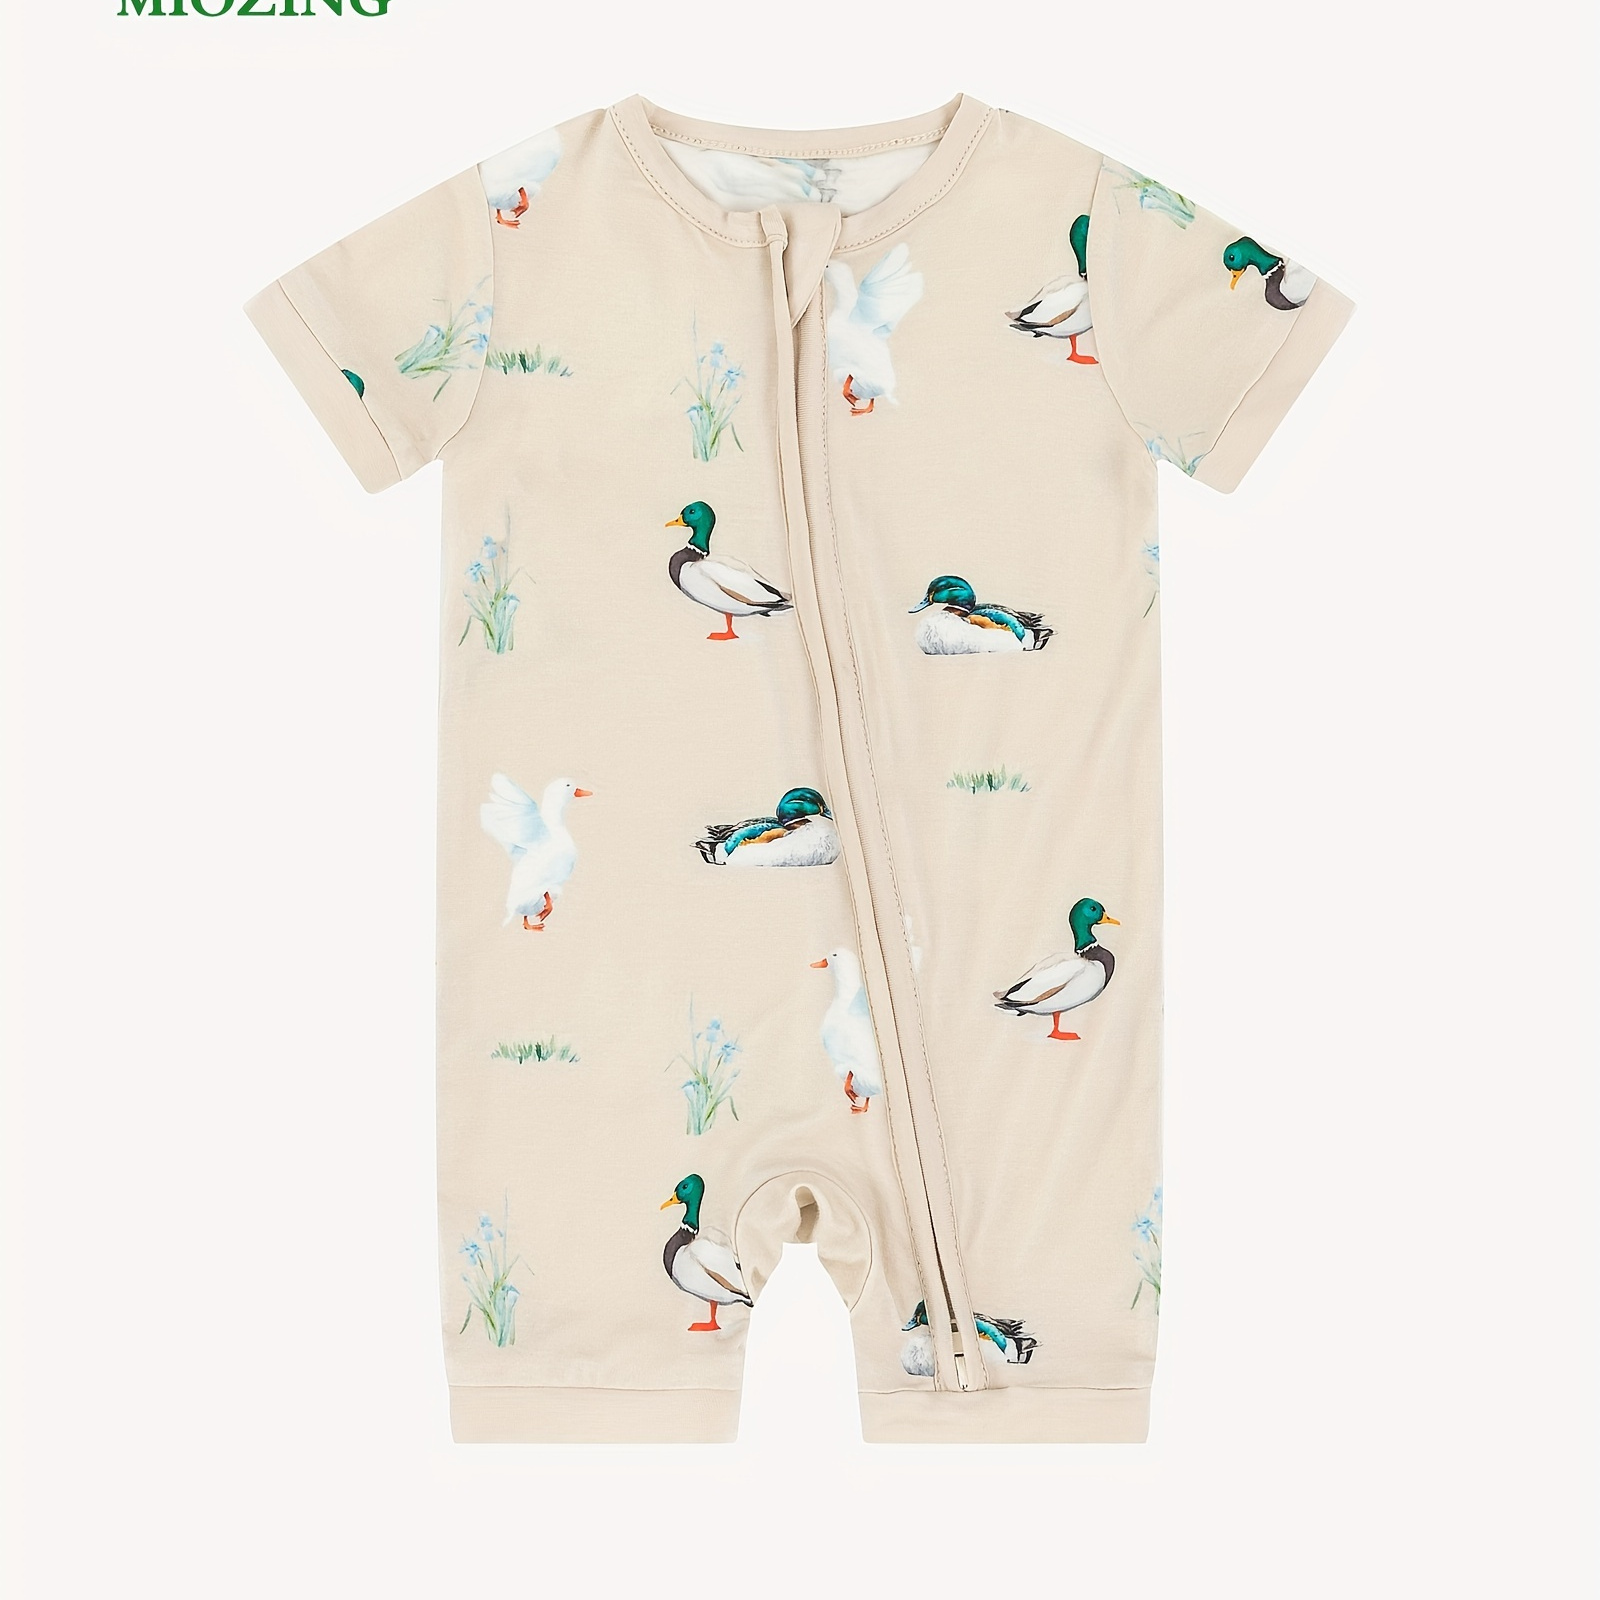 

Miozing Bamboo Fiber Bodysuit For Baby, Cartoon Duck Pattern Zip Up Short Sleeve Onesie, Infant & Toddler Girl's Romper